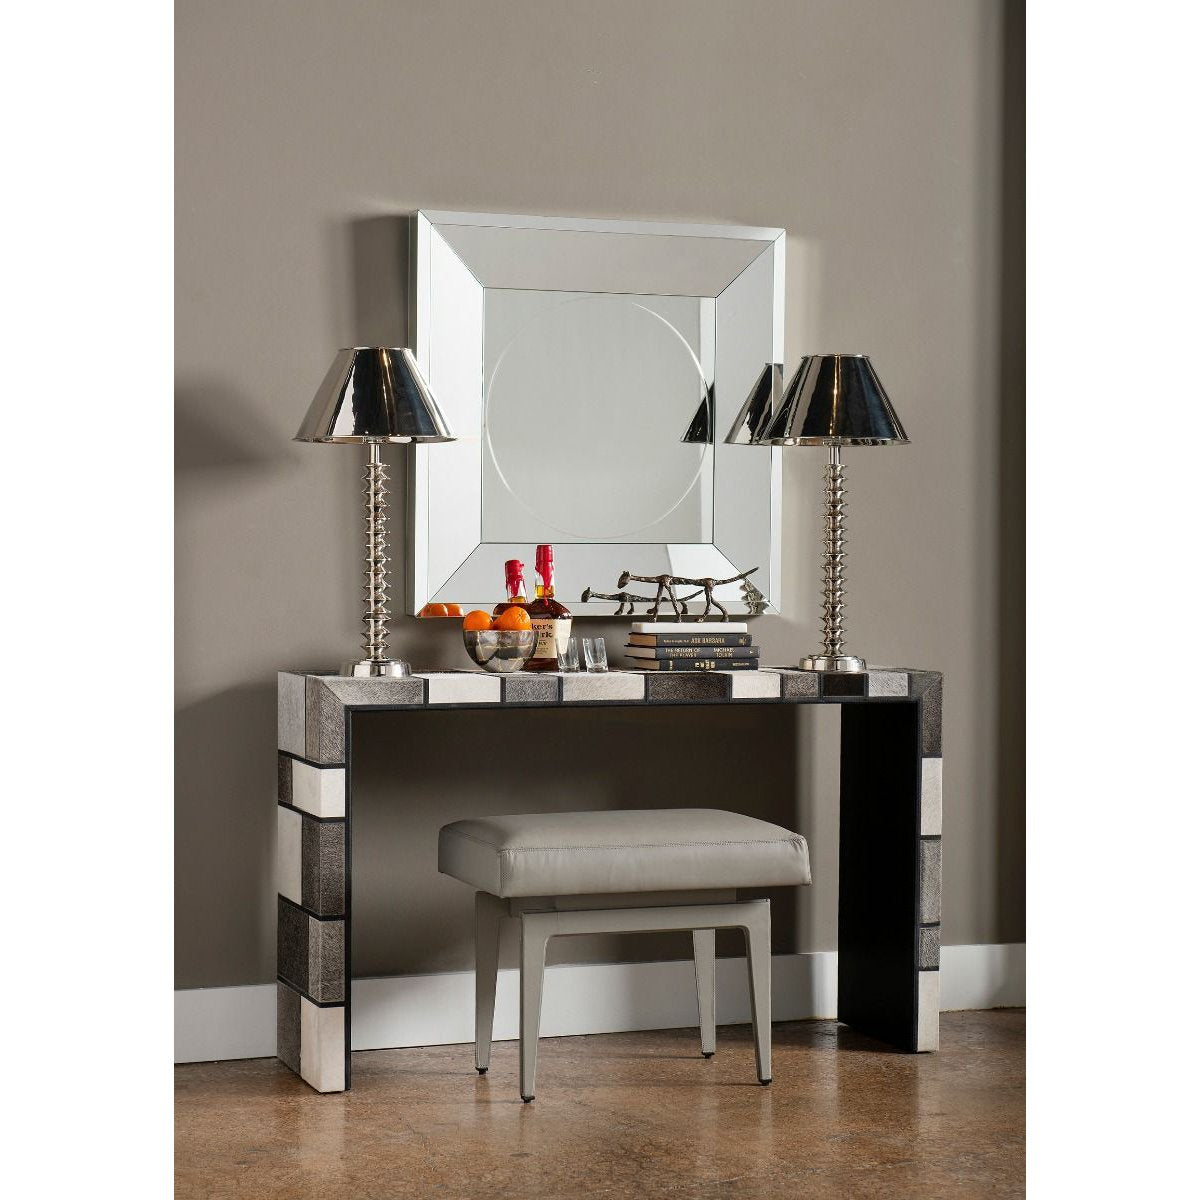 Villa &amp; House Mondrian Console Table - Gray